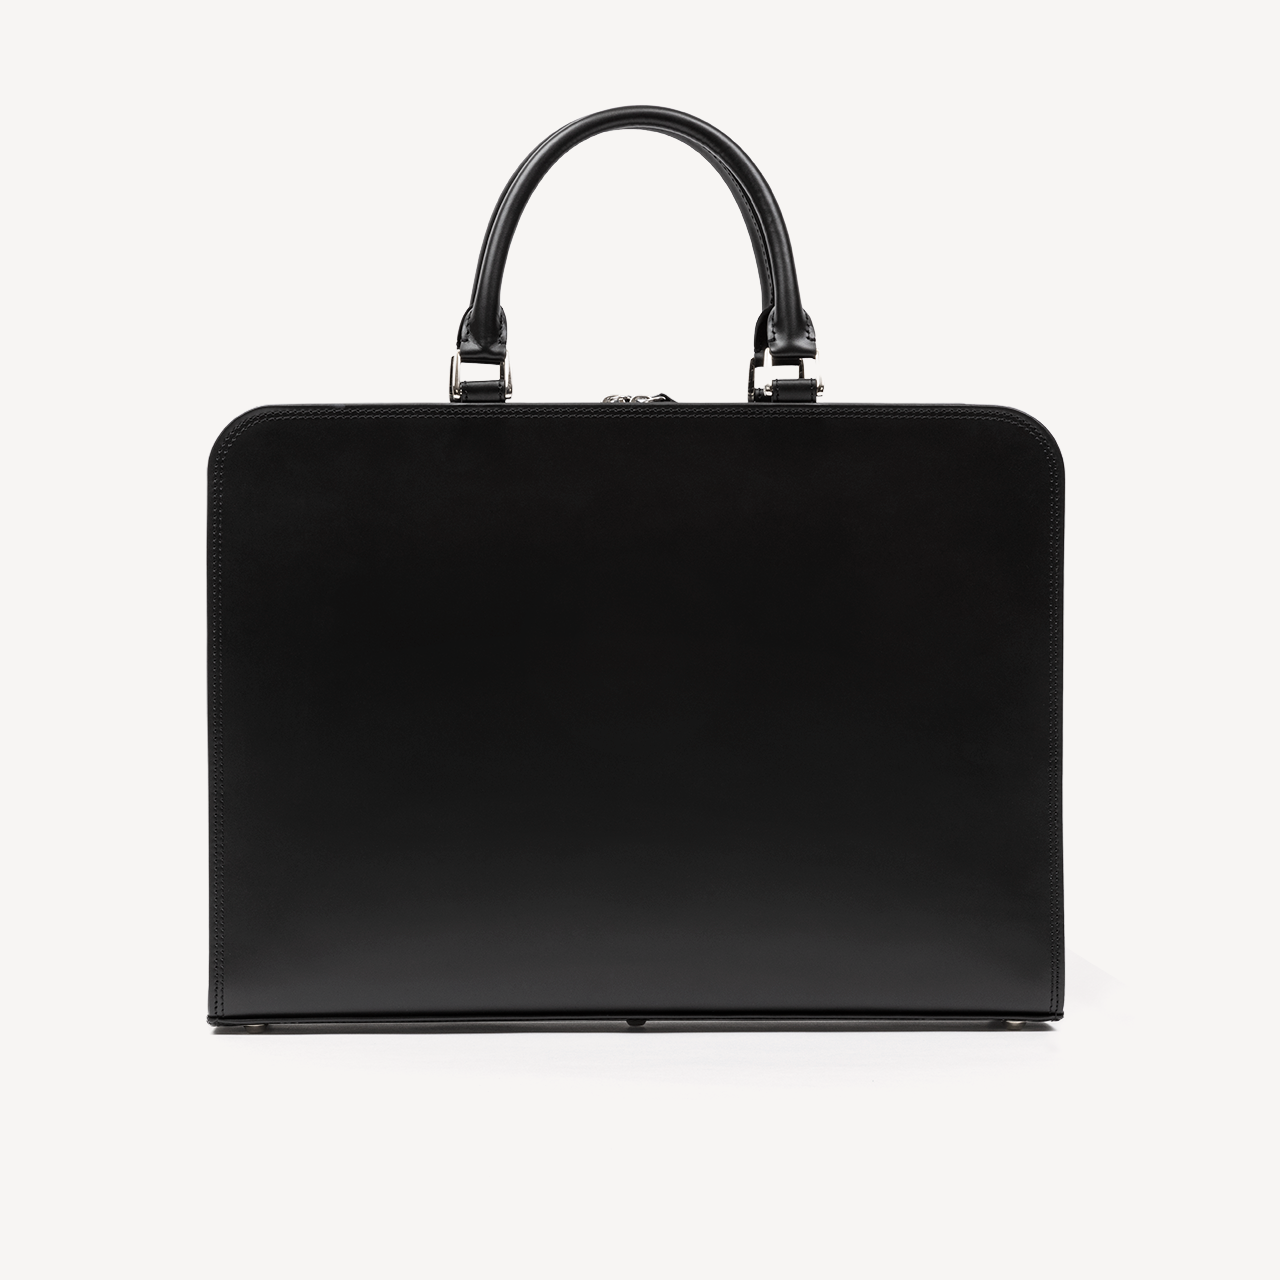 Kensington Leather Laptop Bag